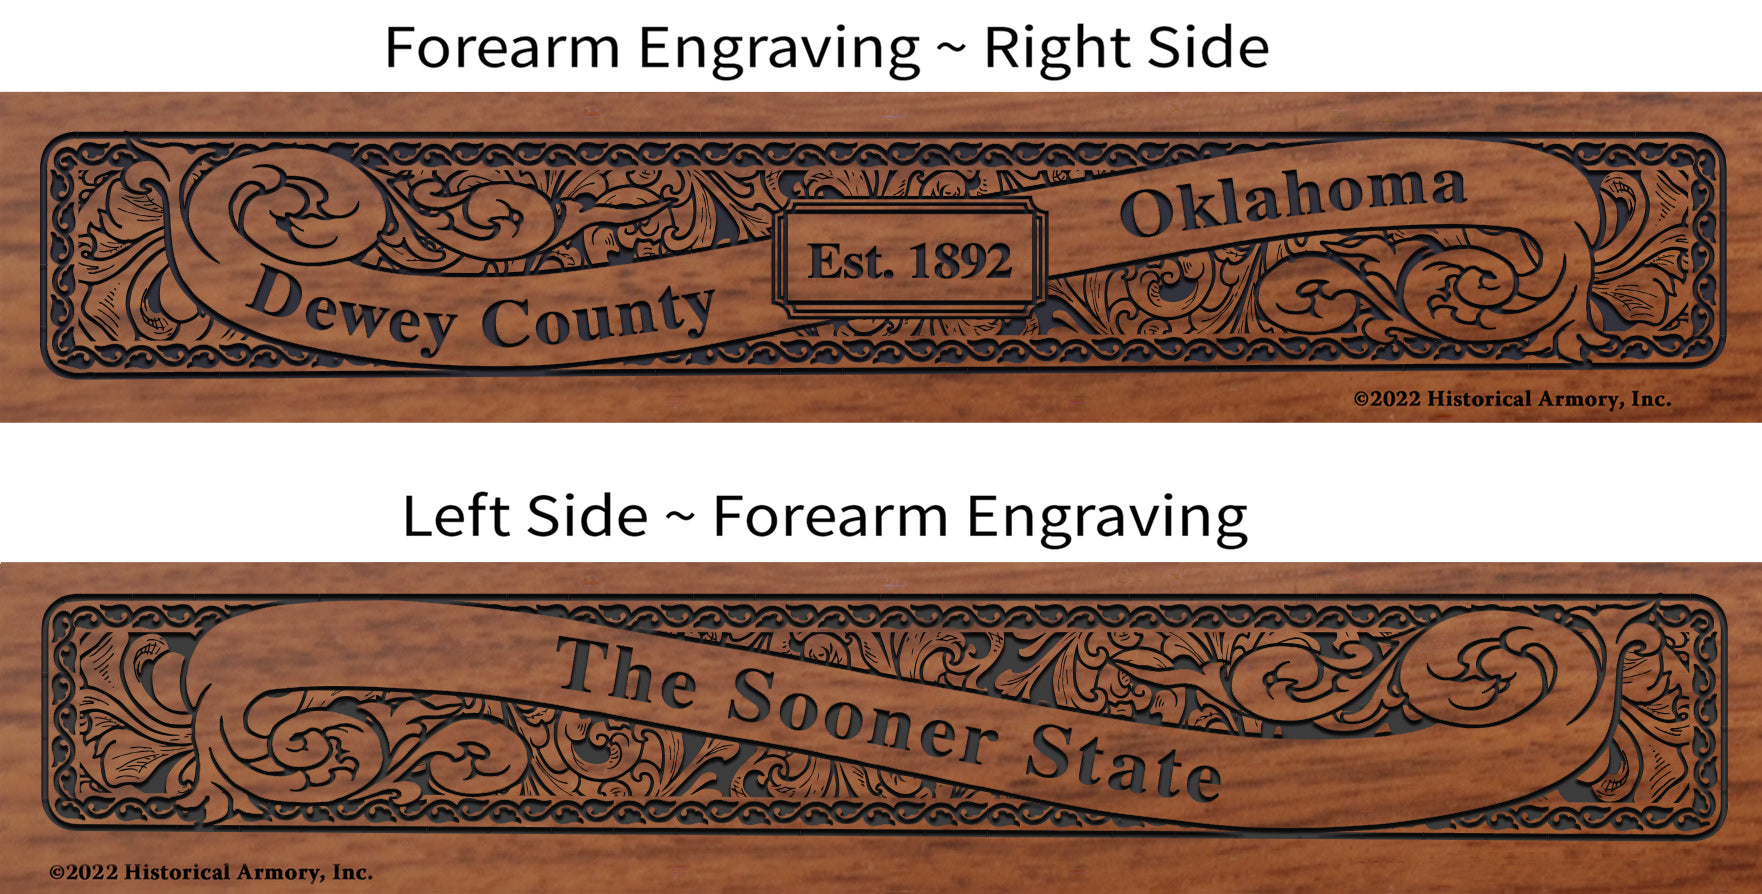 Dewey County Oklahoma Engraved Rifle Forearm